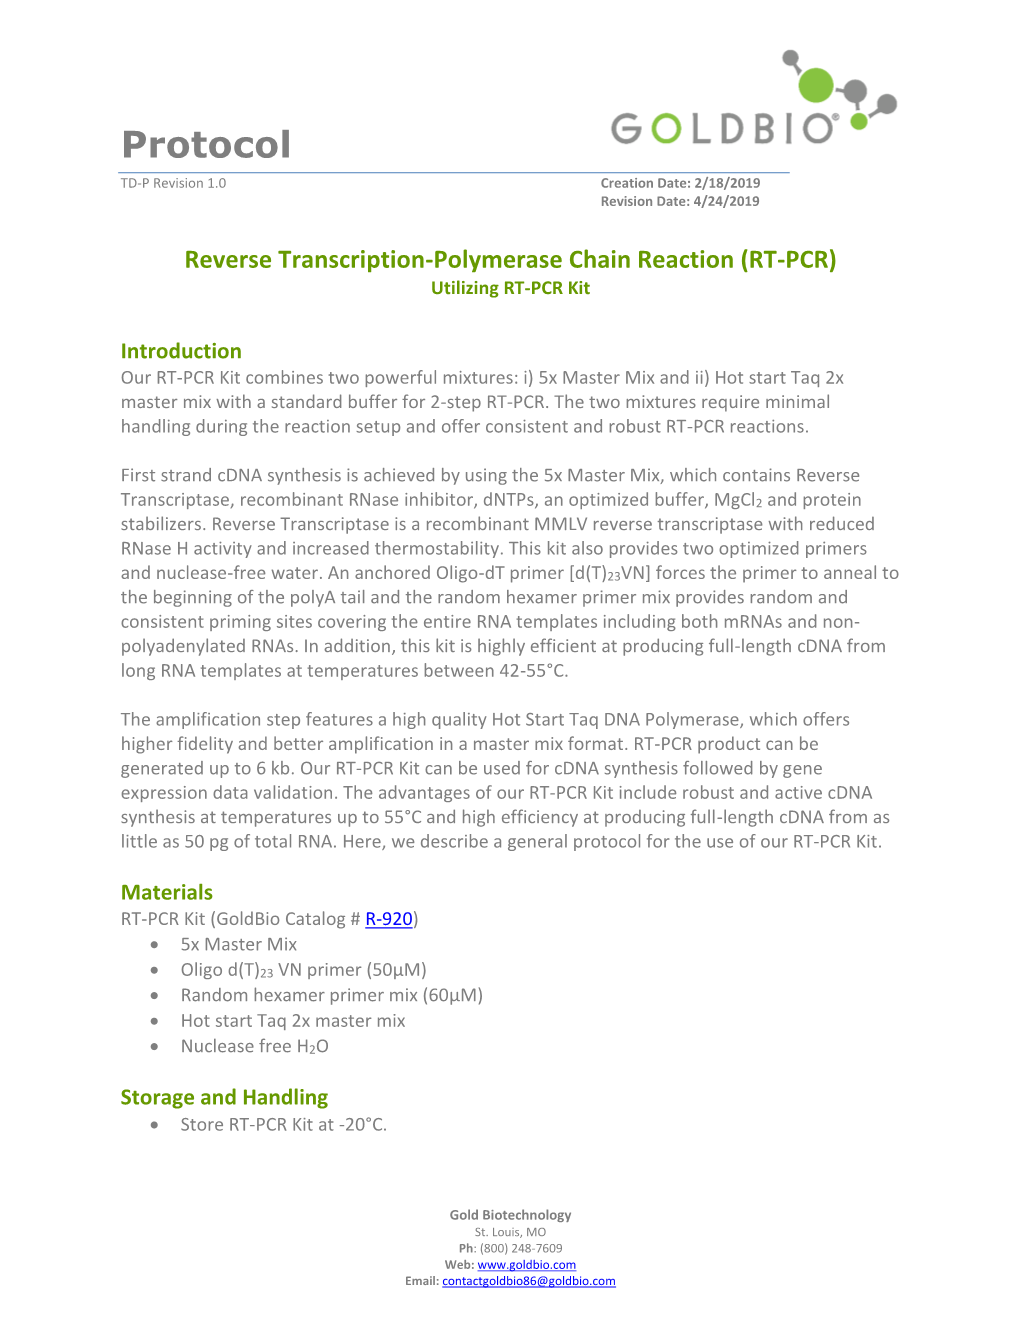 RT-PCR Protocol Utilizing RT-PCR